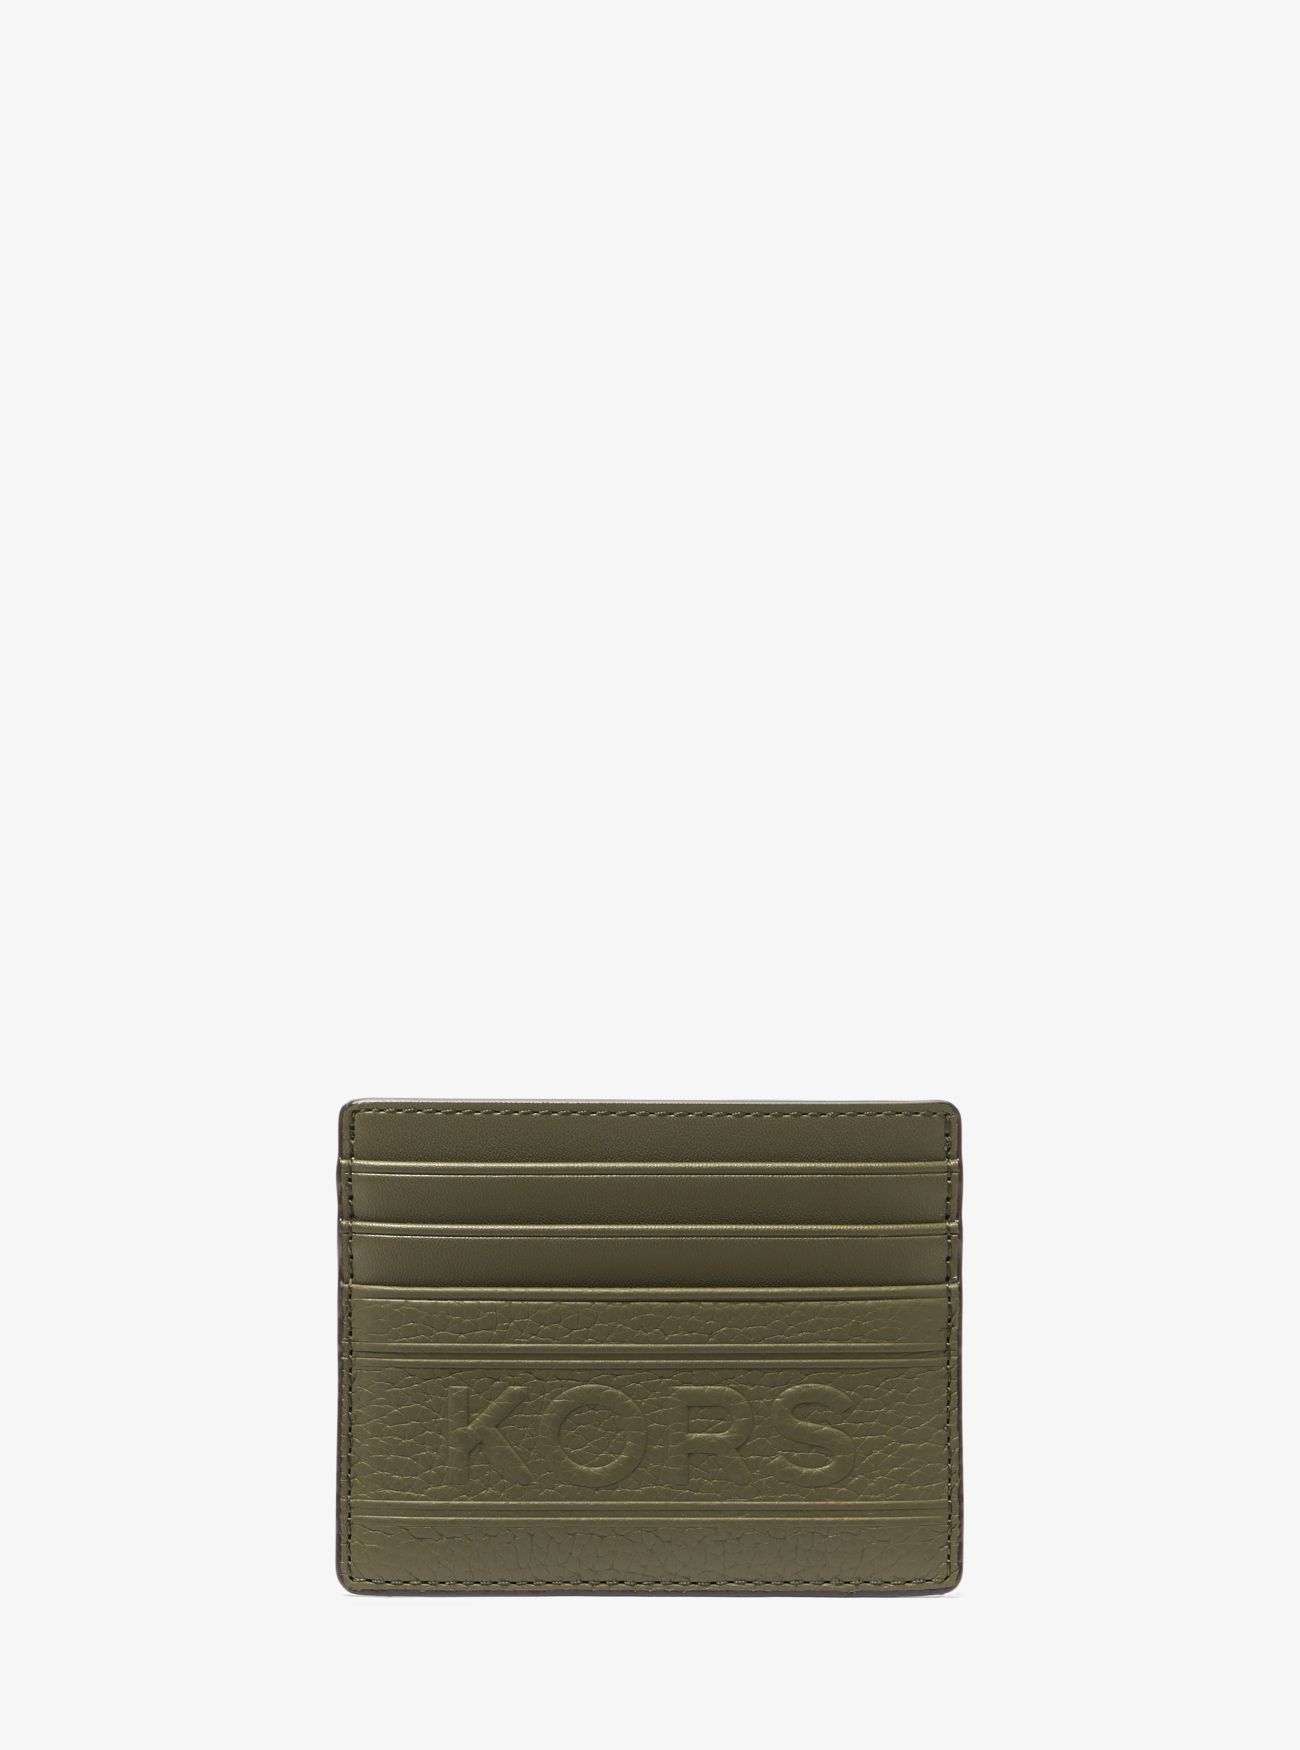 MK Hudson Embossed Pebbled Leather Tall Card Case - Green - Michael Kors